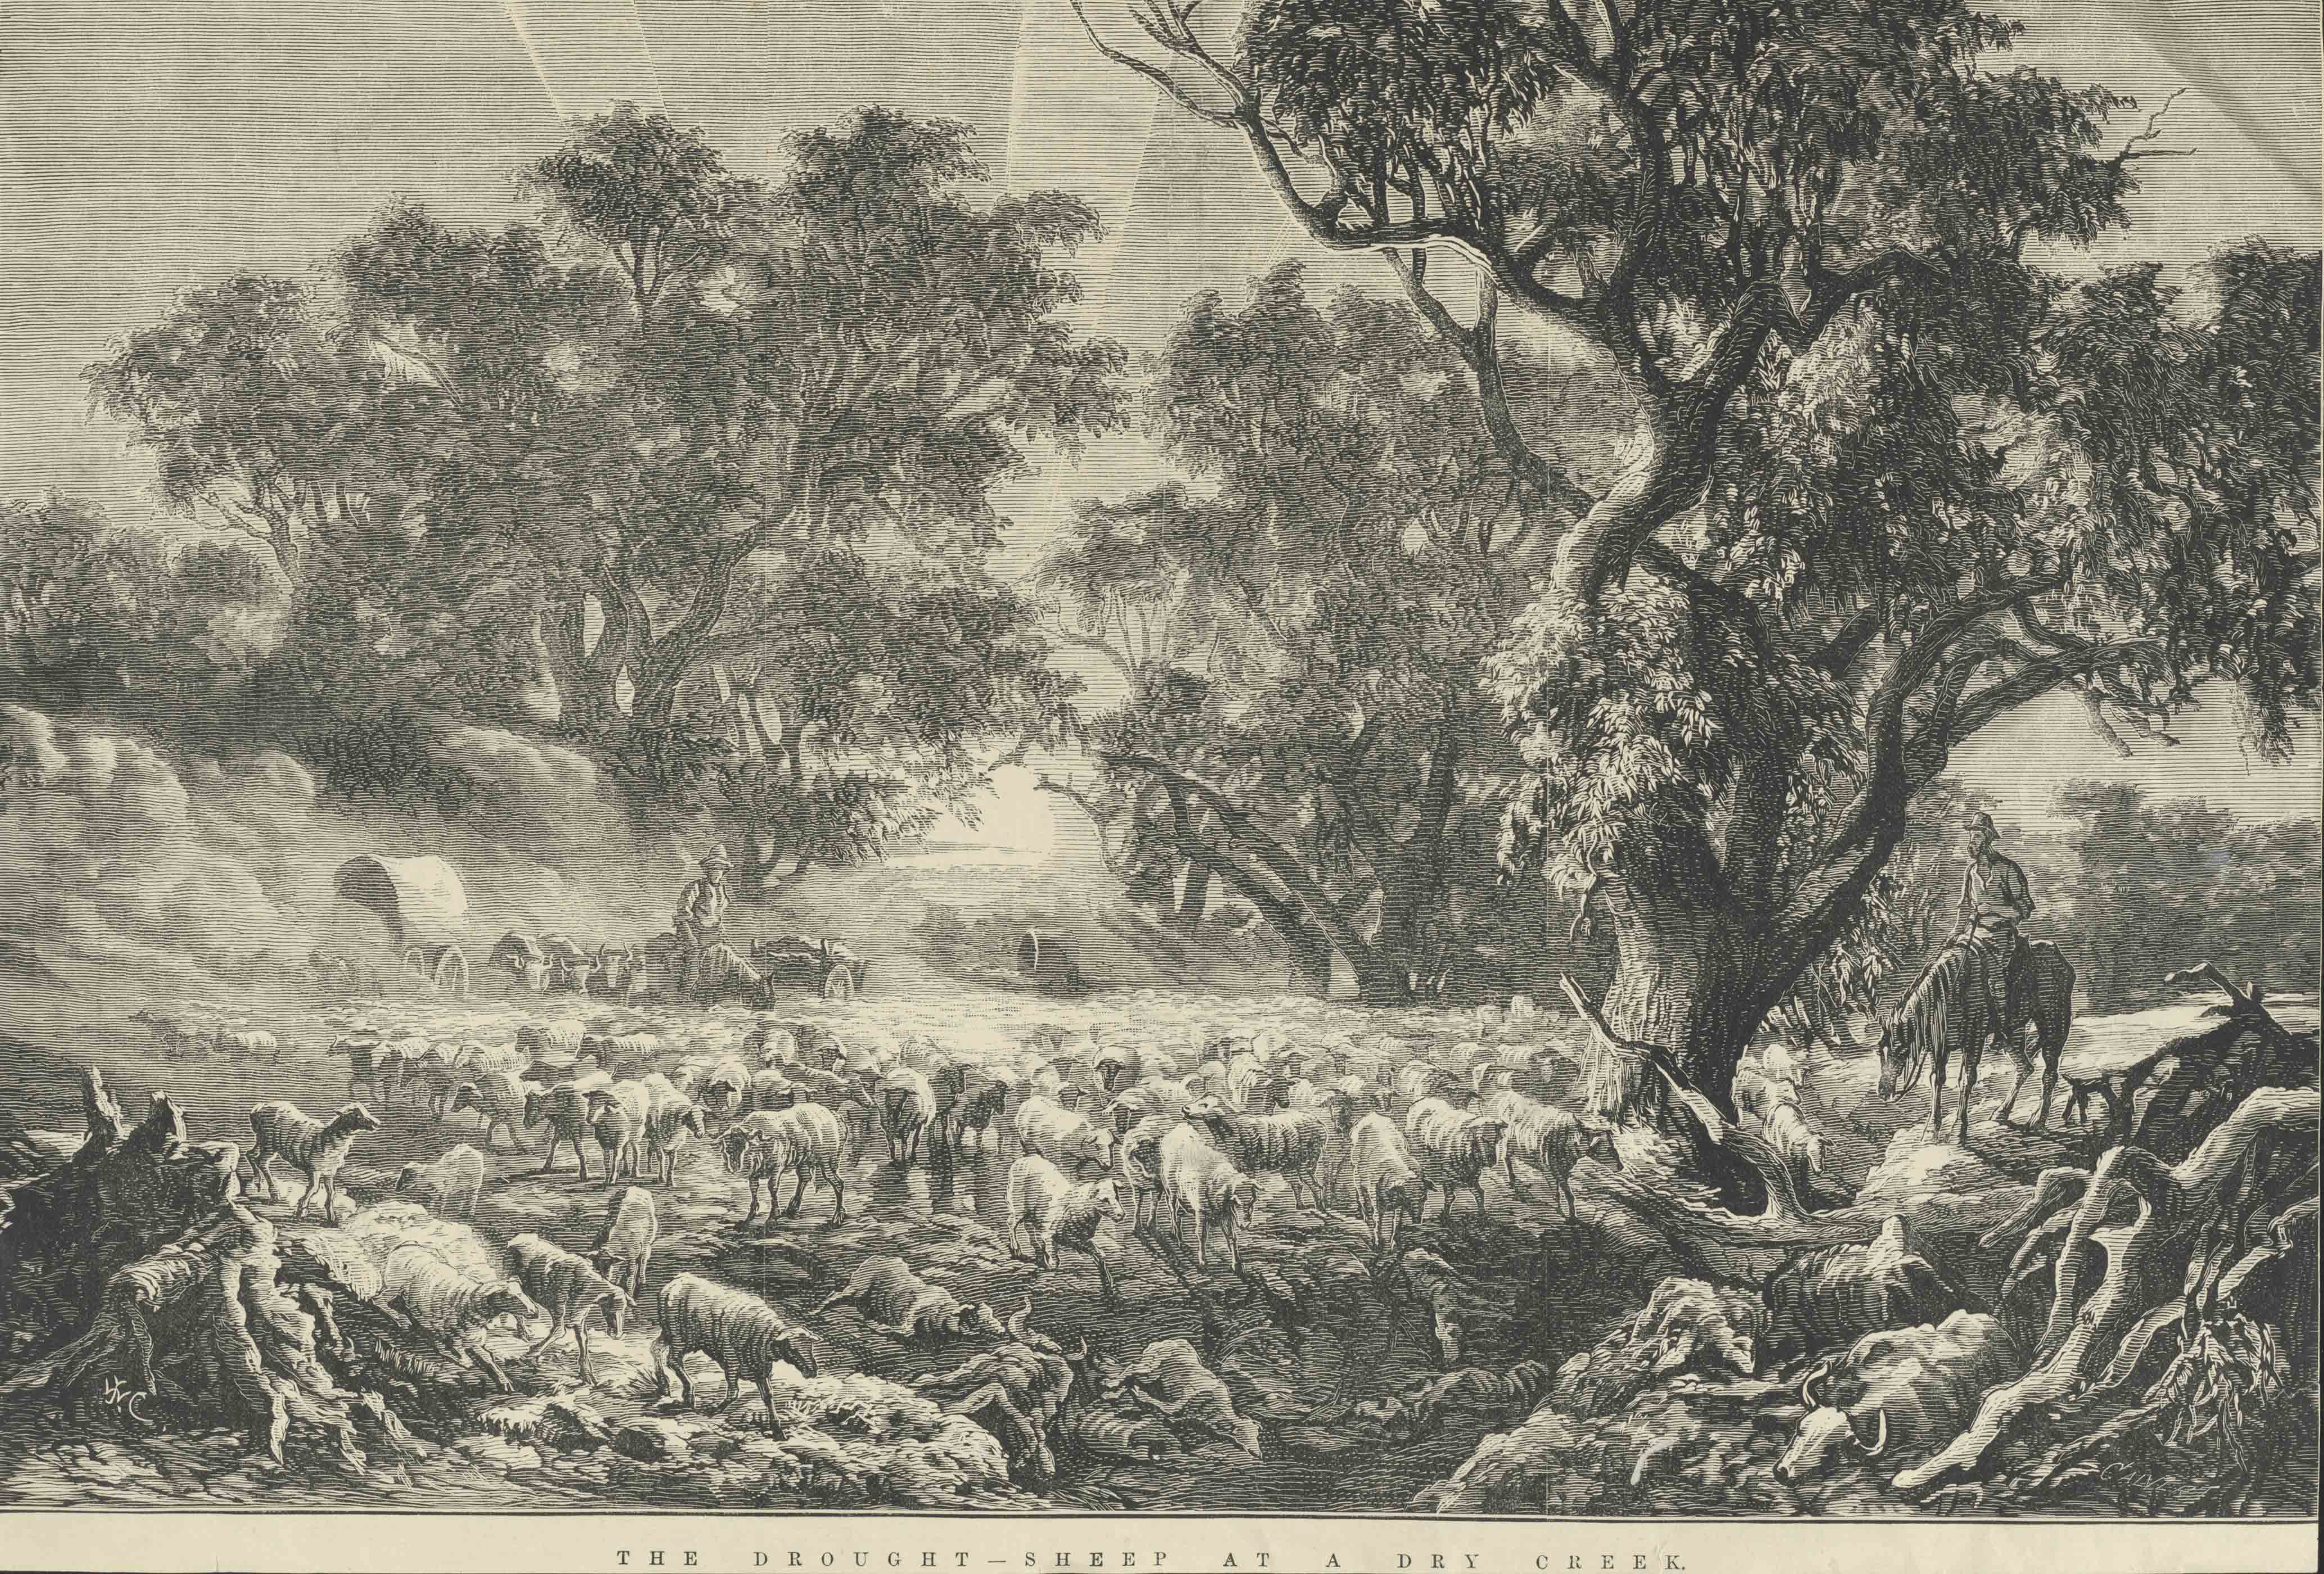 The Drought, Sheep at a Dry Creek, J.W.C. Calvert, 